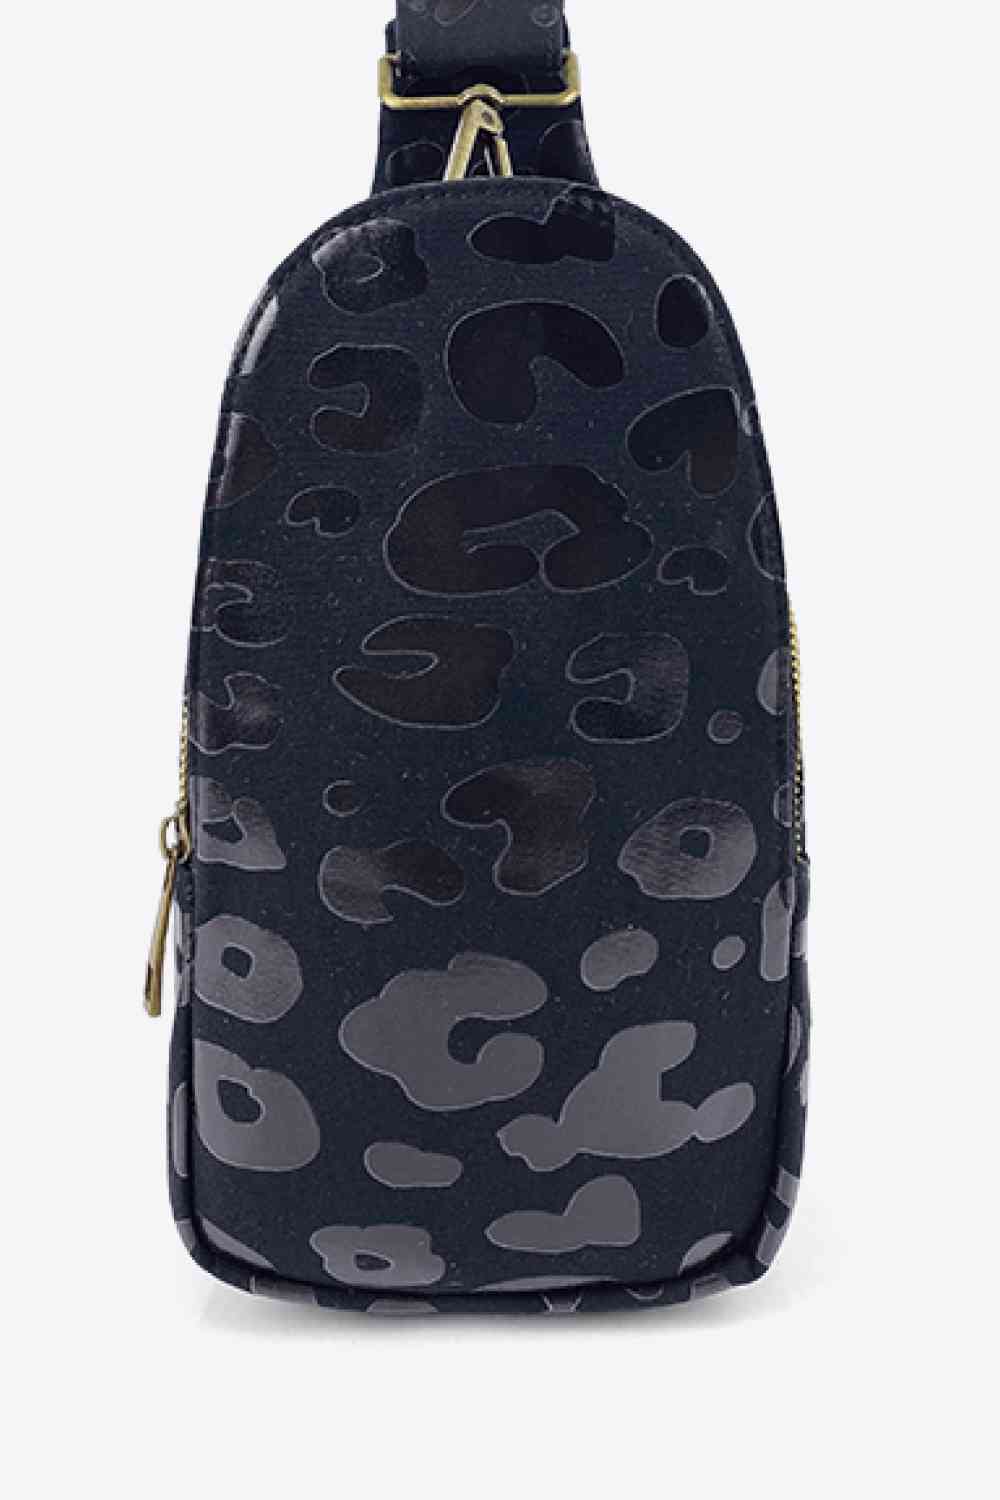 Premium PU Leather Sling Bag - Stylish & Durable